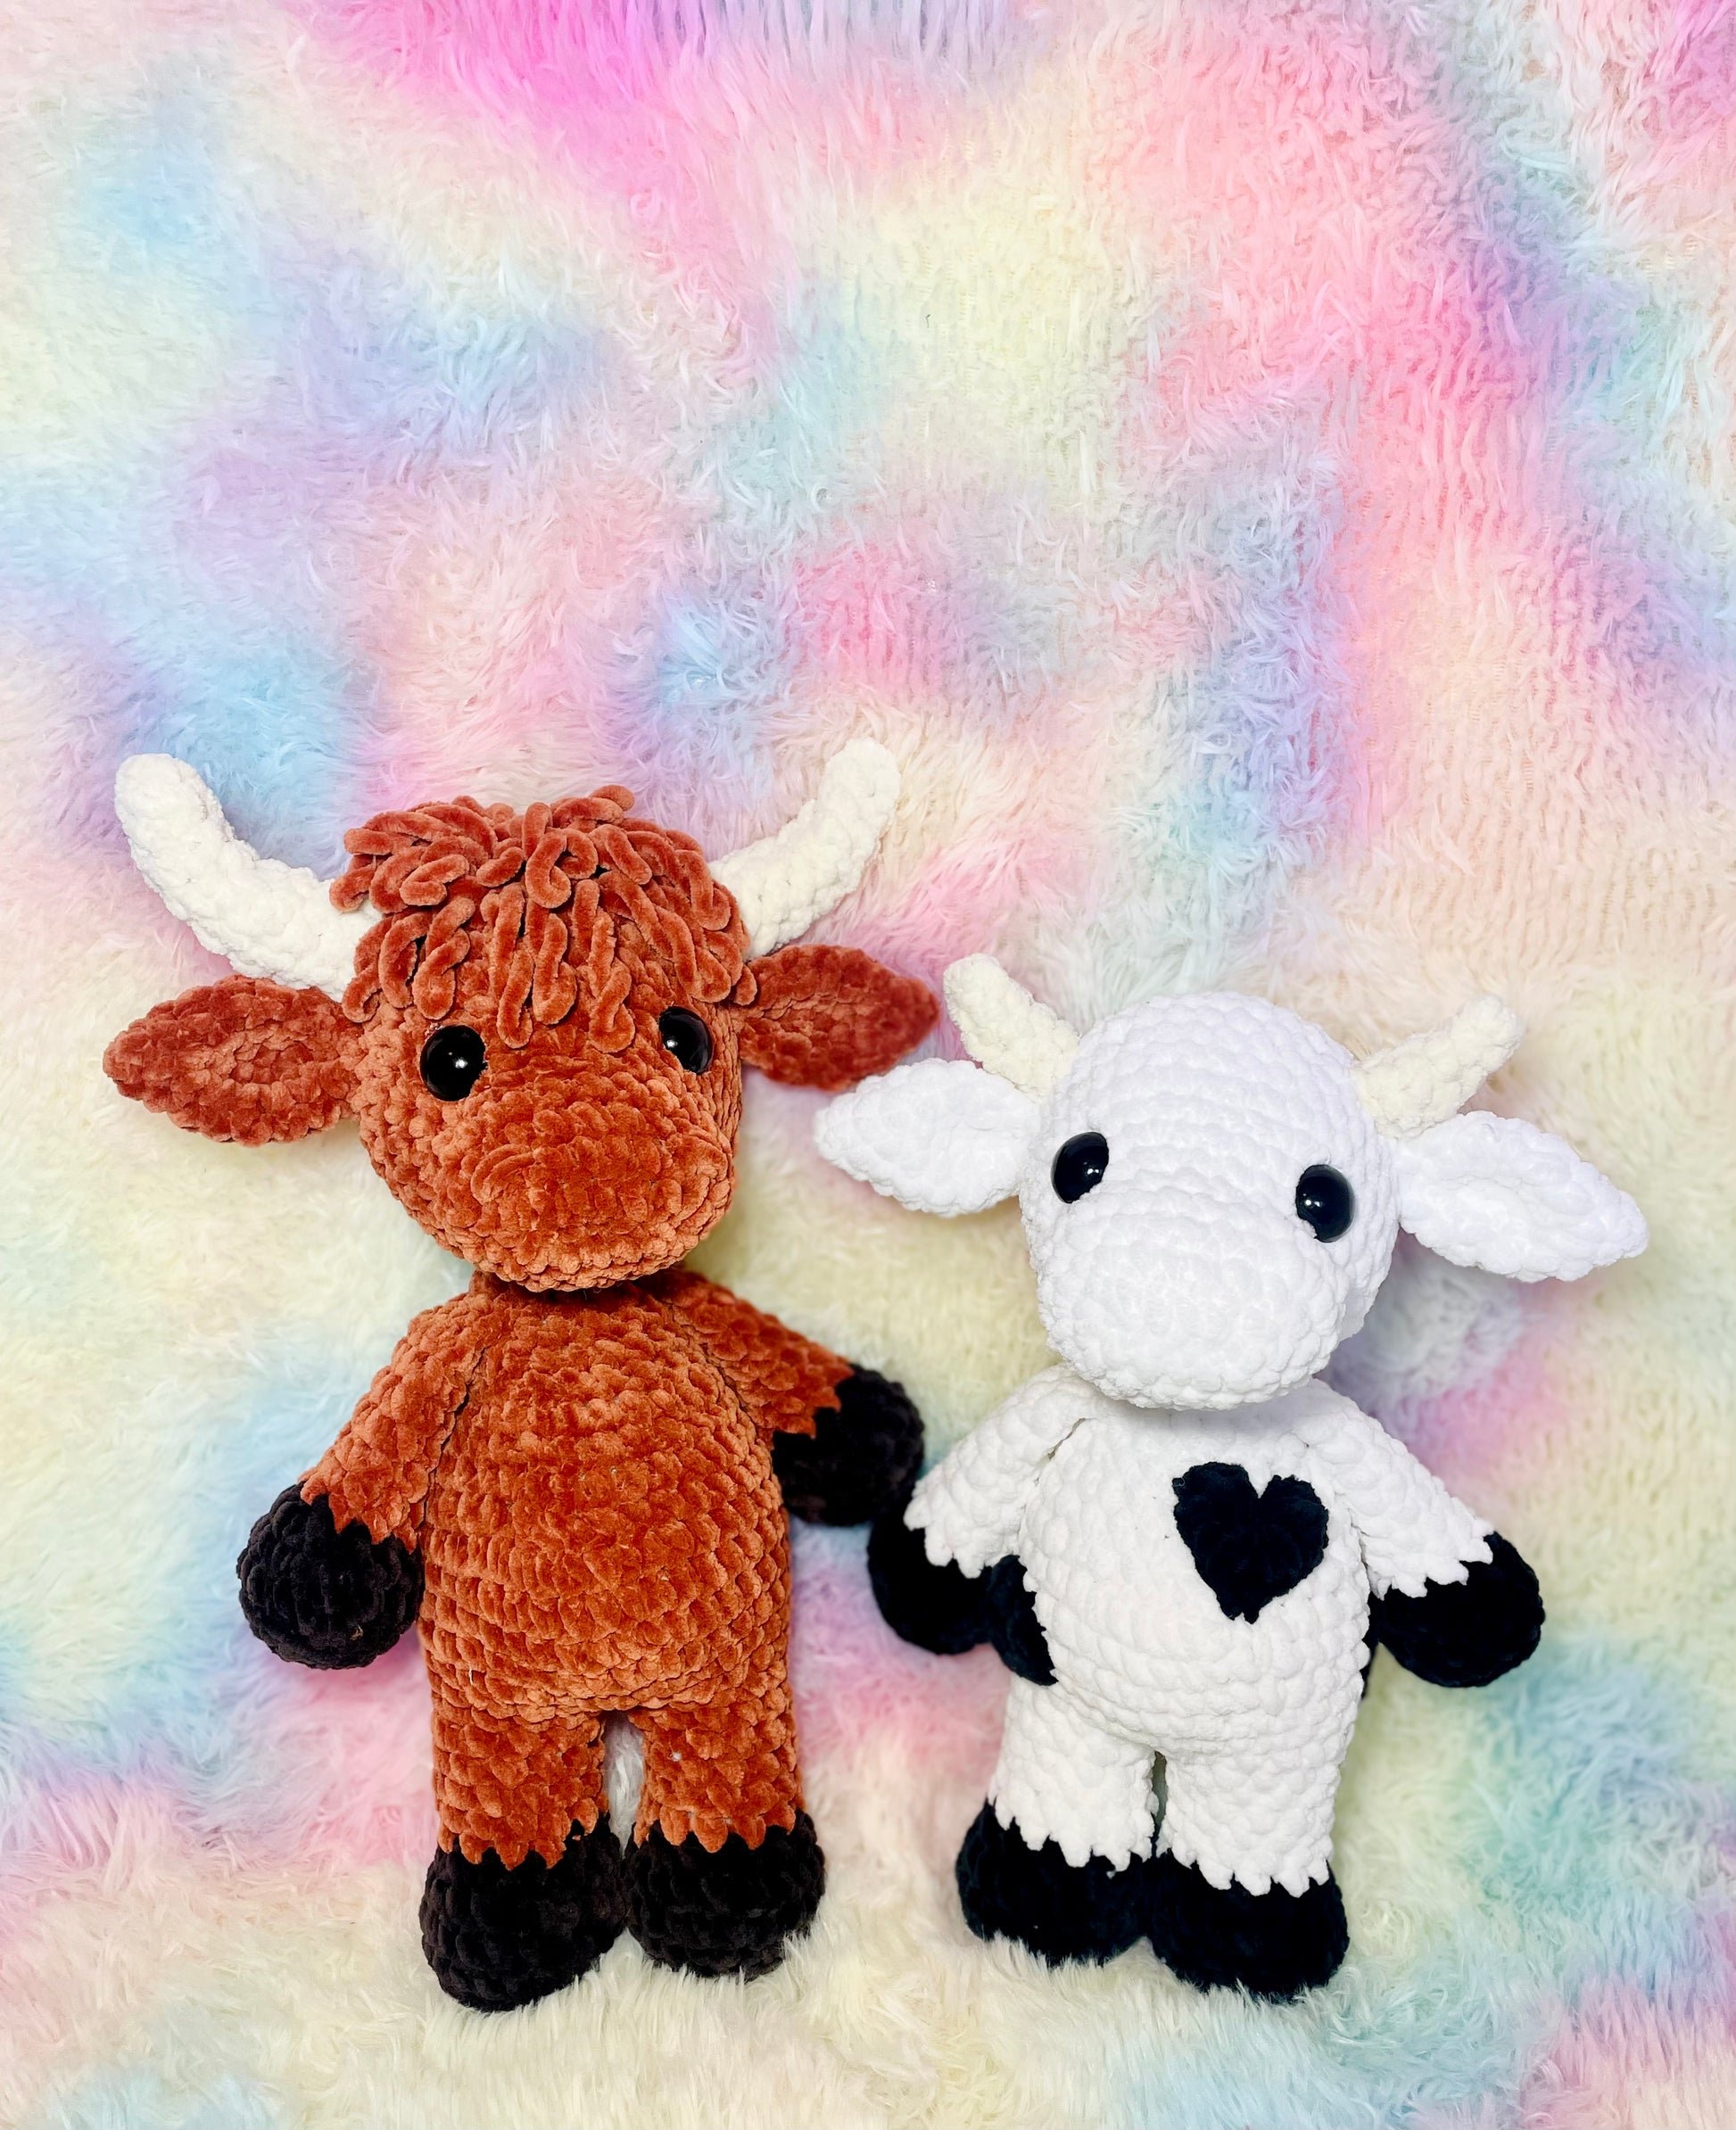 crochet cow and crochet yak